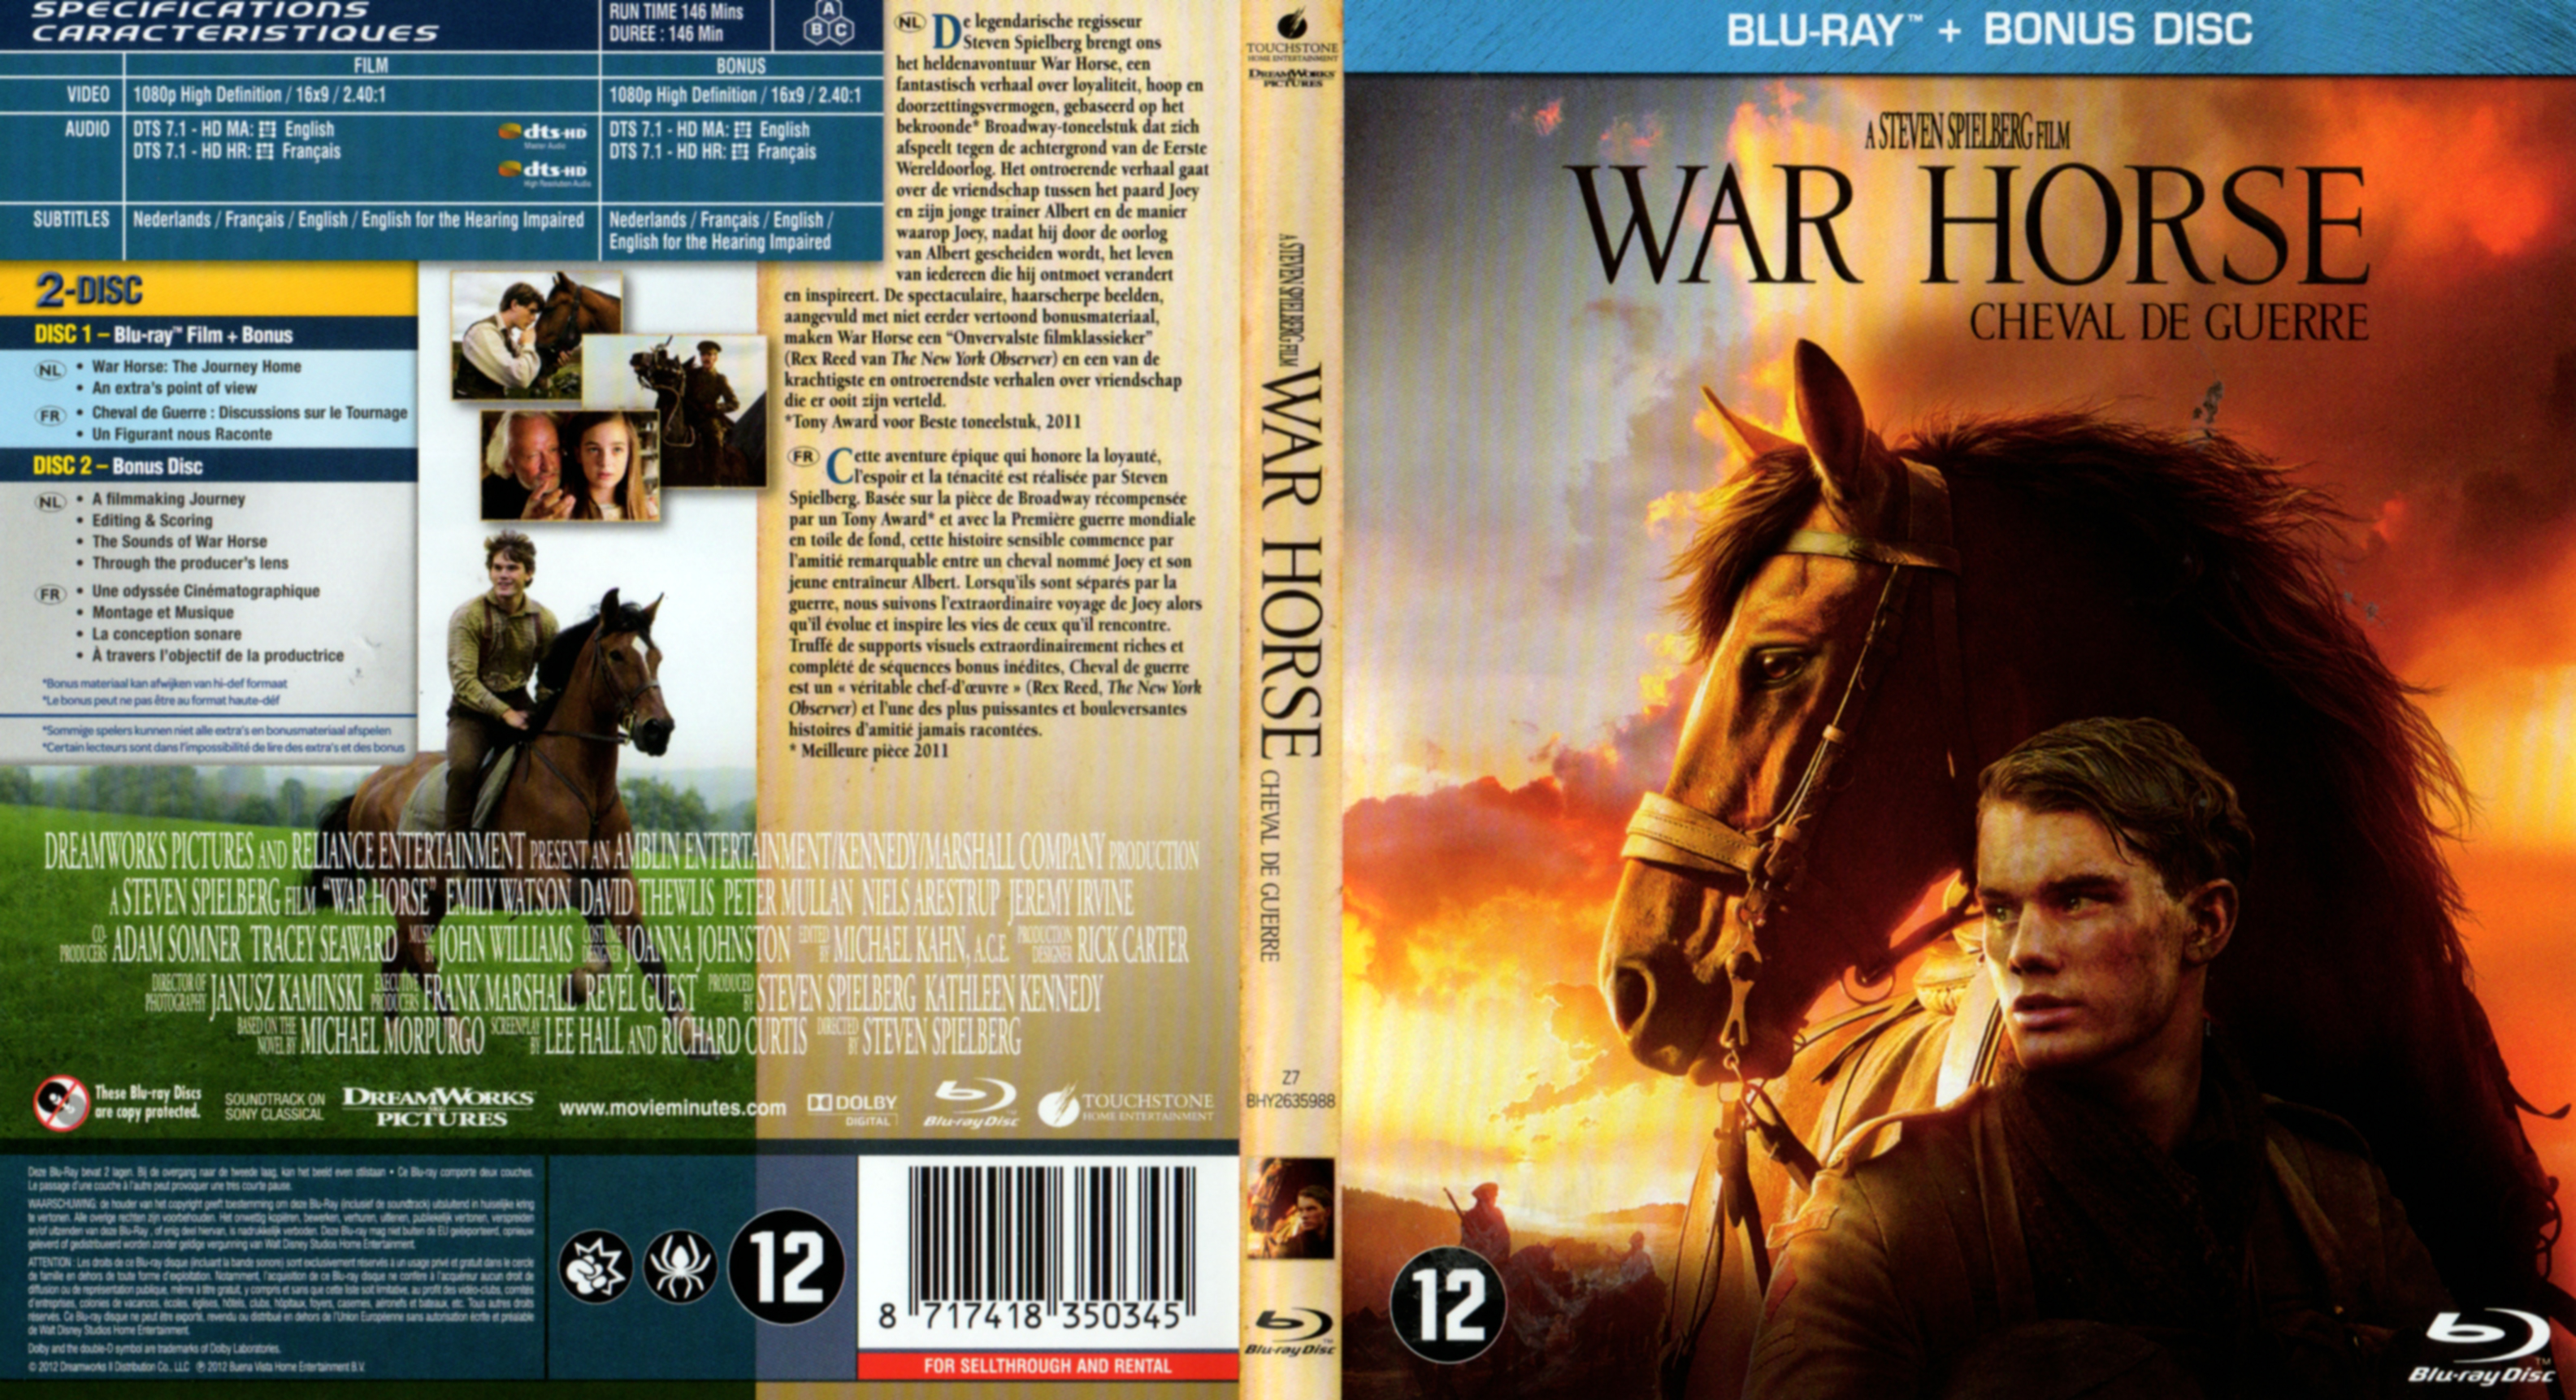 Jaquette DVD Cheval de Guerre (BLU-RAY) v2